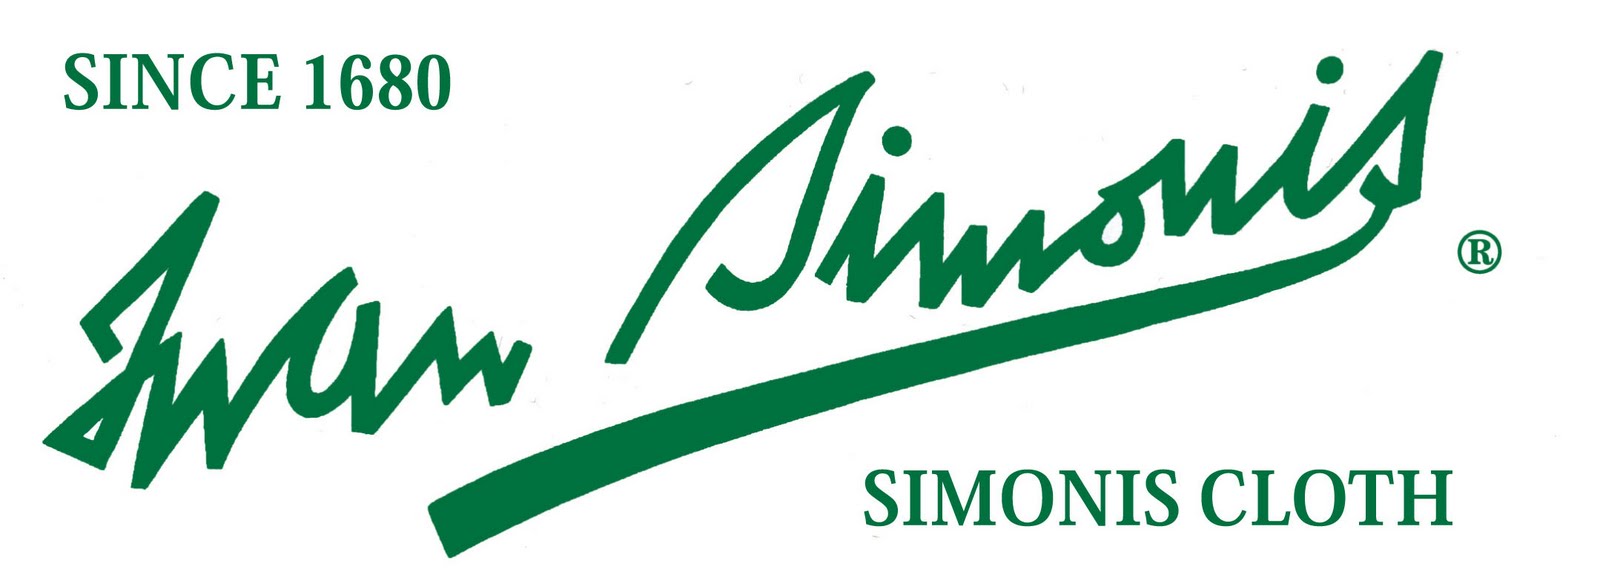 Simonis_Logo1